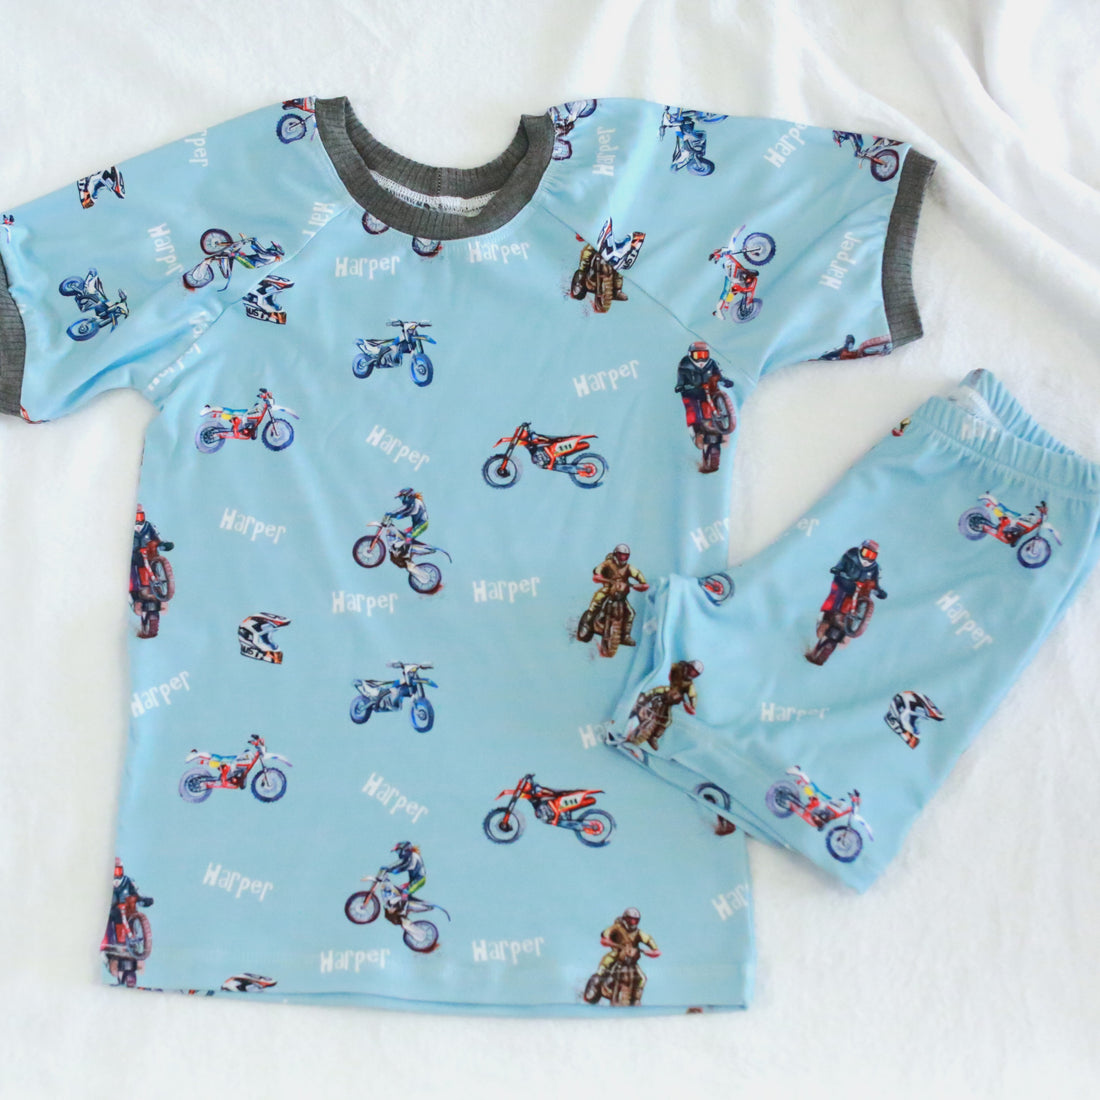 Dirt Bike Pajamas  - Short or Long Sleeve (3 months to kids 14)